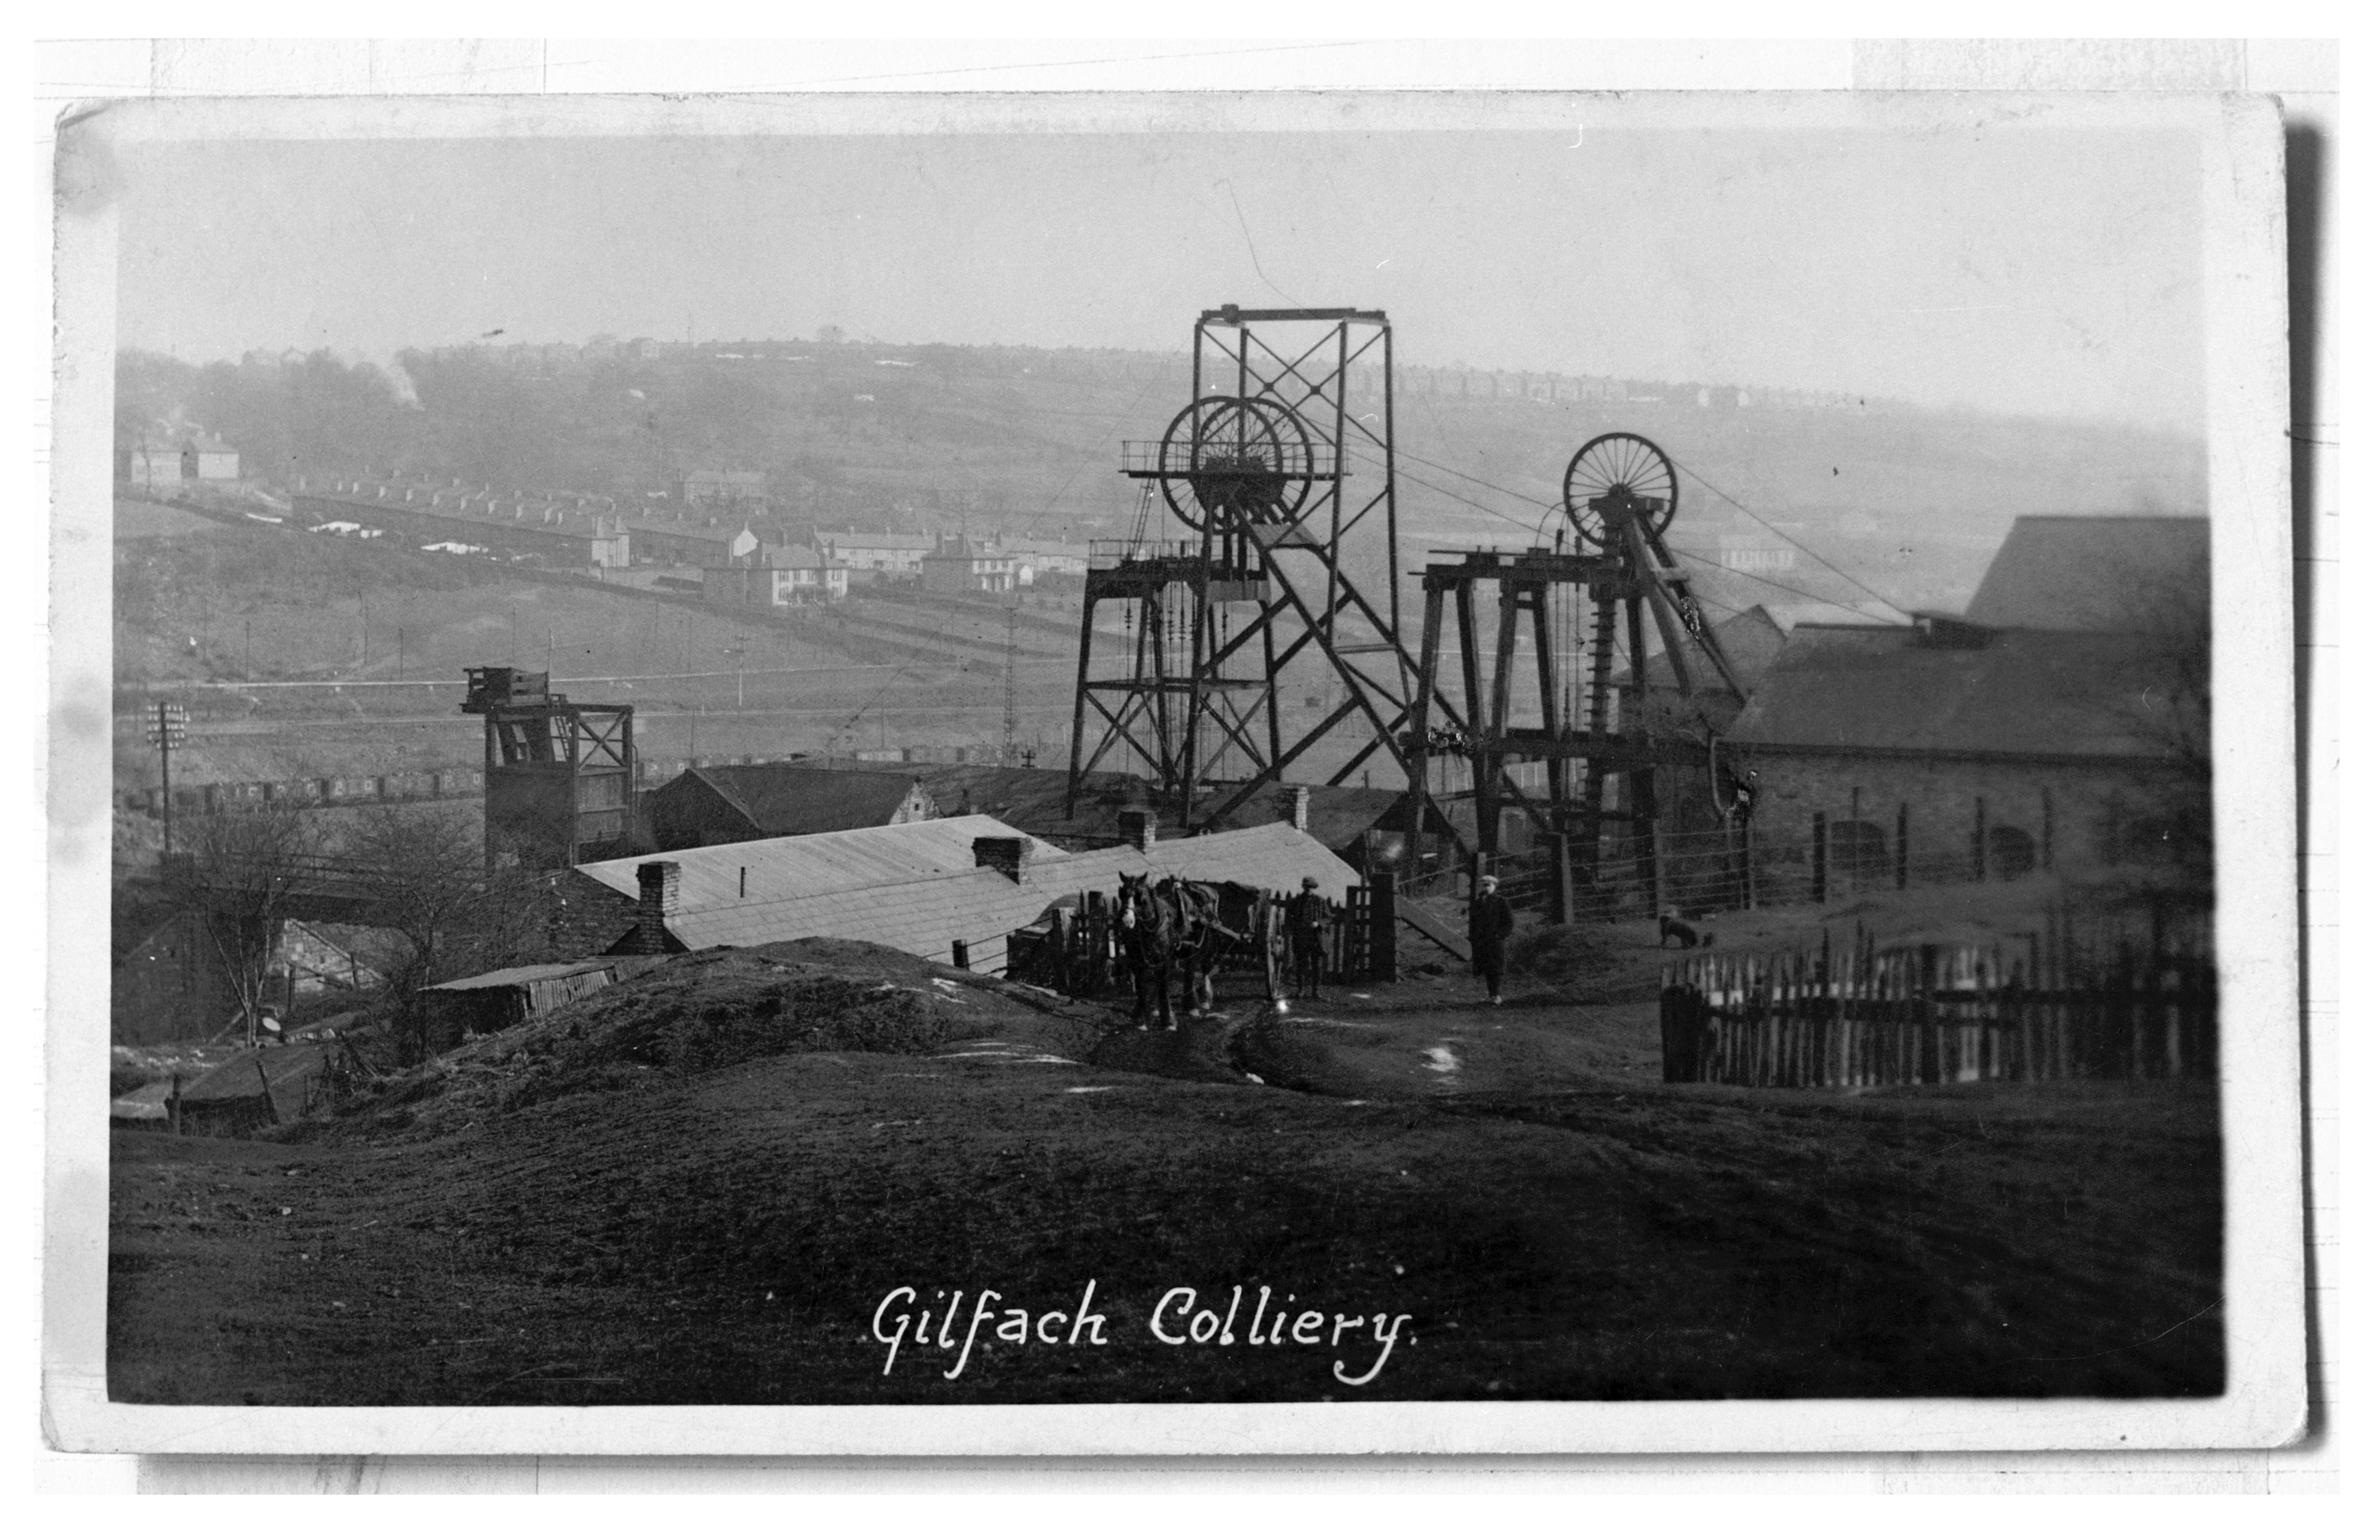 Gilfach Colliery, film negative